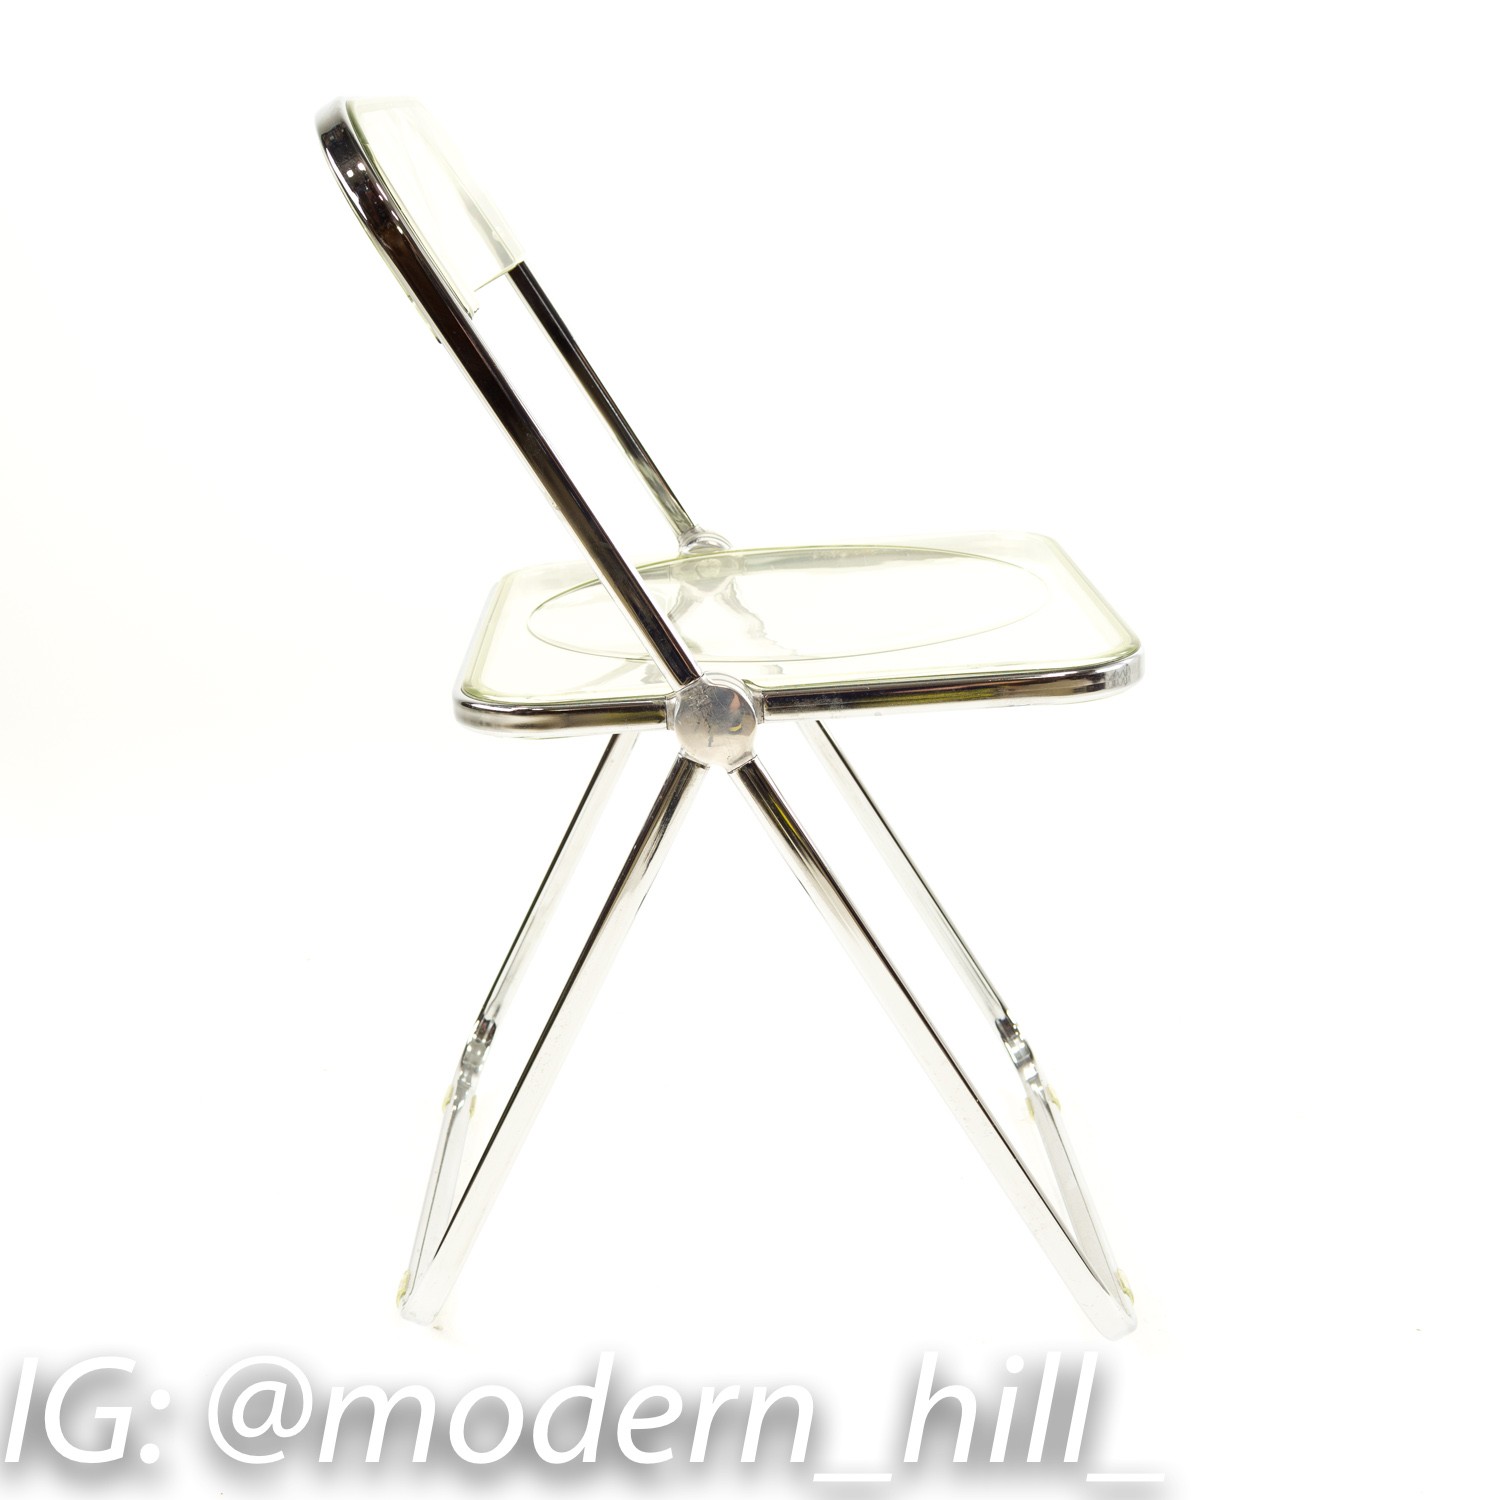 Anonima Castelli Italian Lucite Folding Chairs - Set of 6